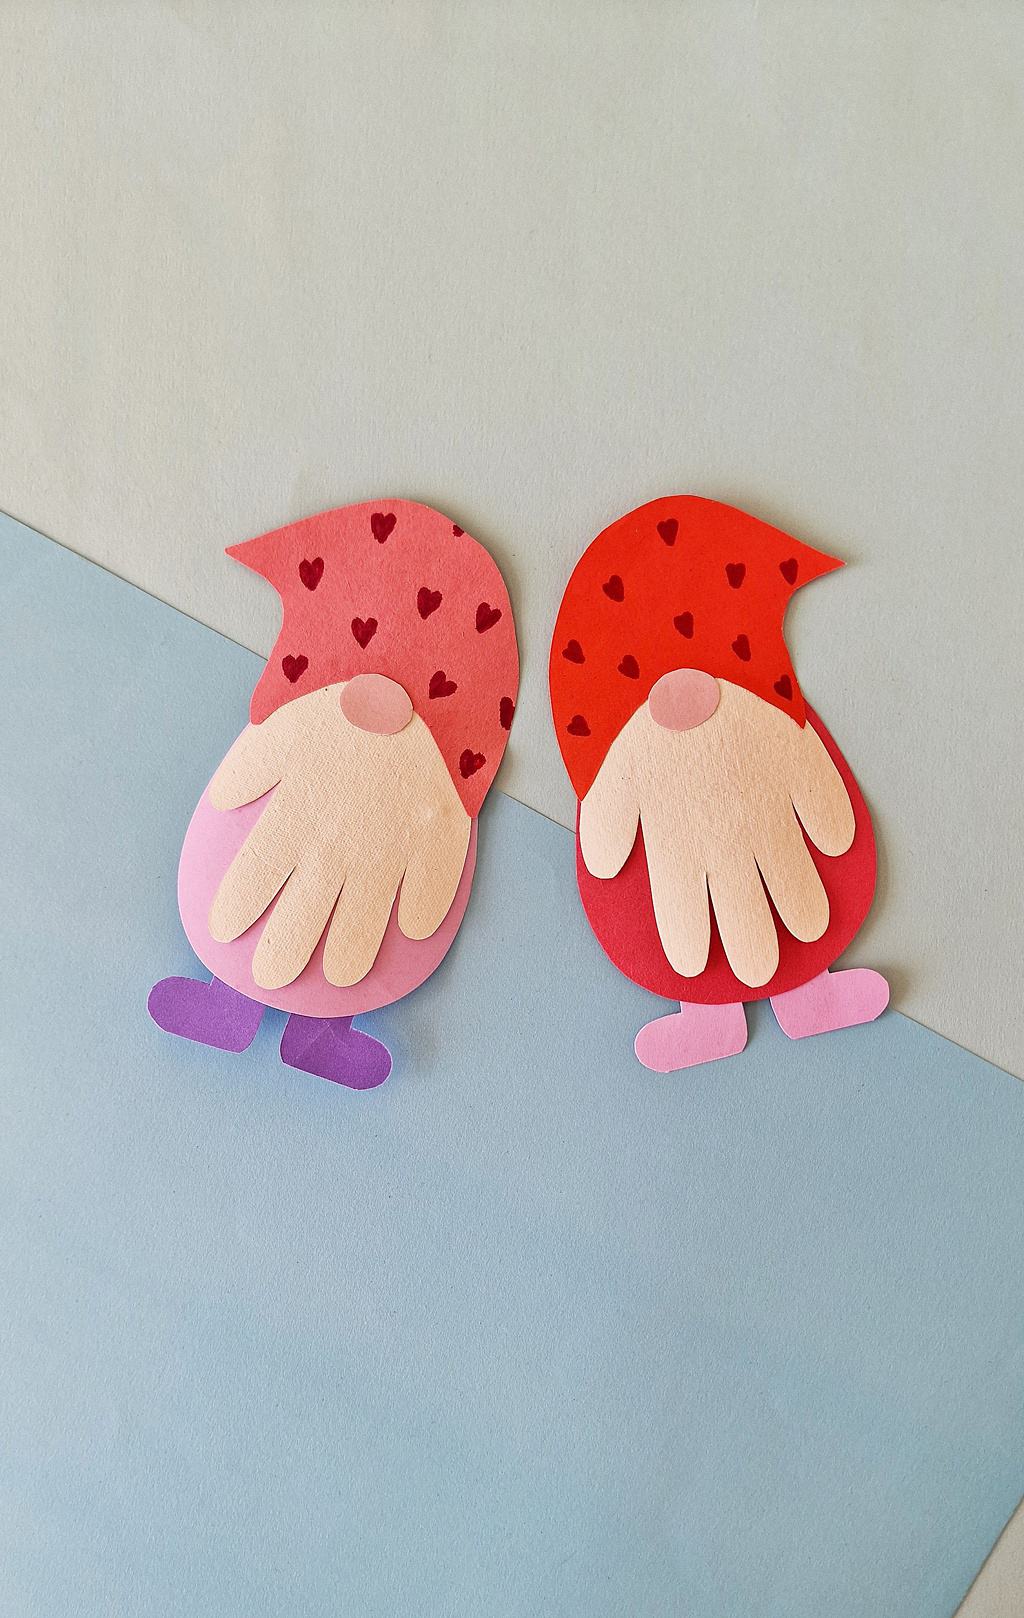 Handprint Gnome for Valentine’s Day